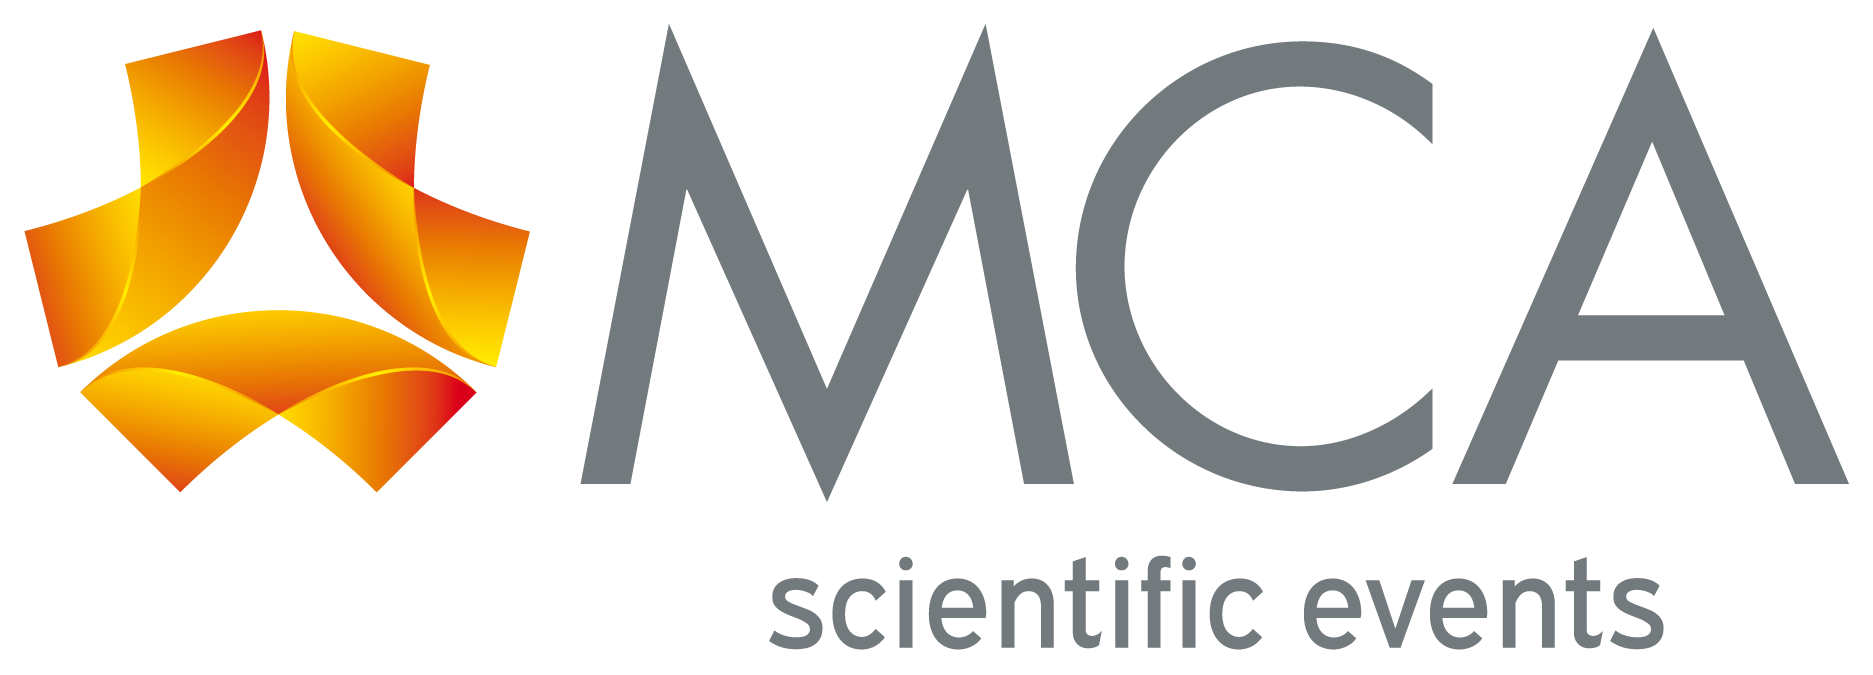 Science events. MCA. Логотип MCA. MCA records логотип. Логотип Мца.